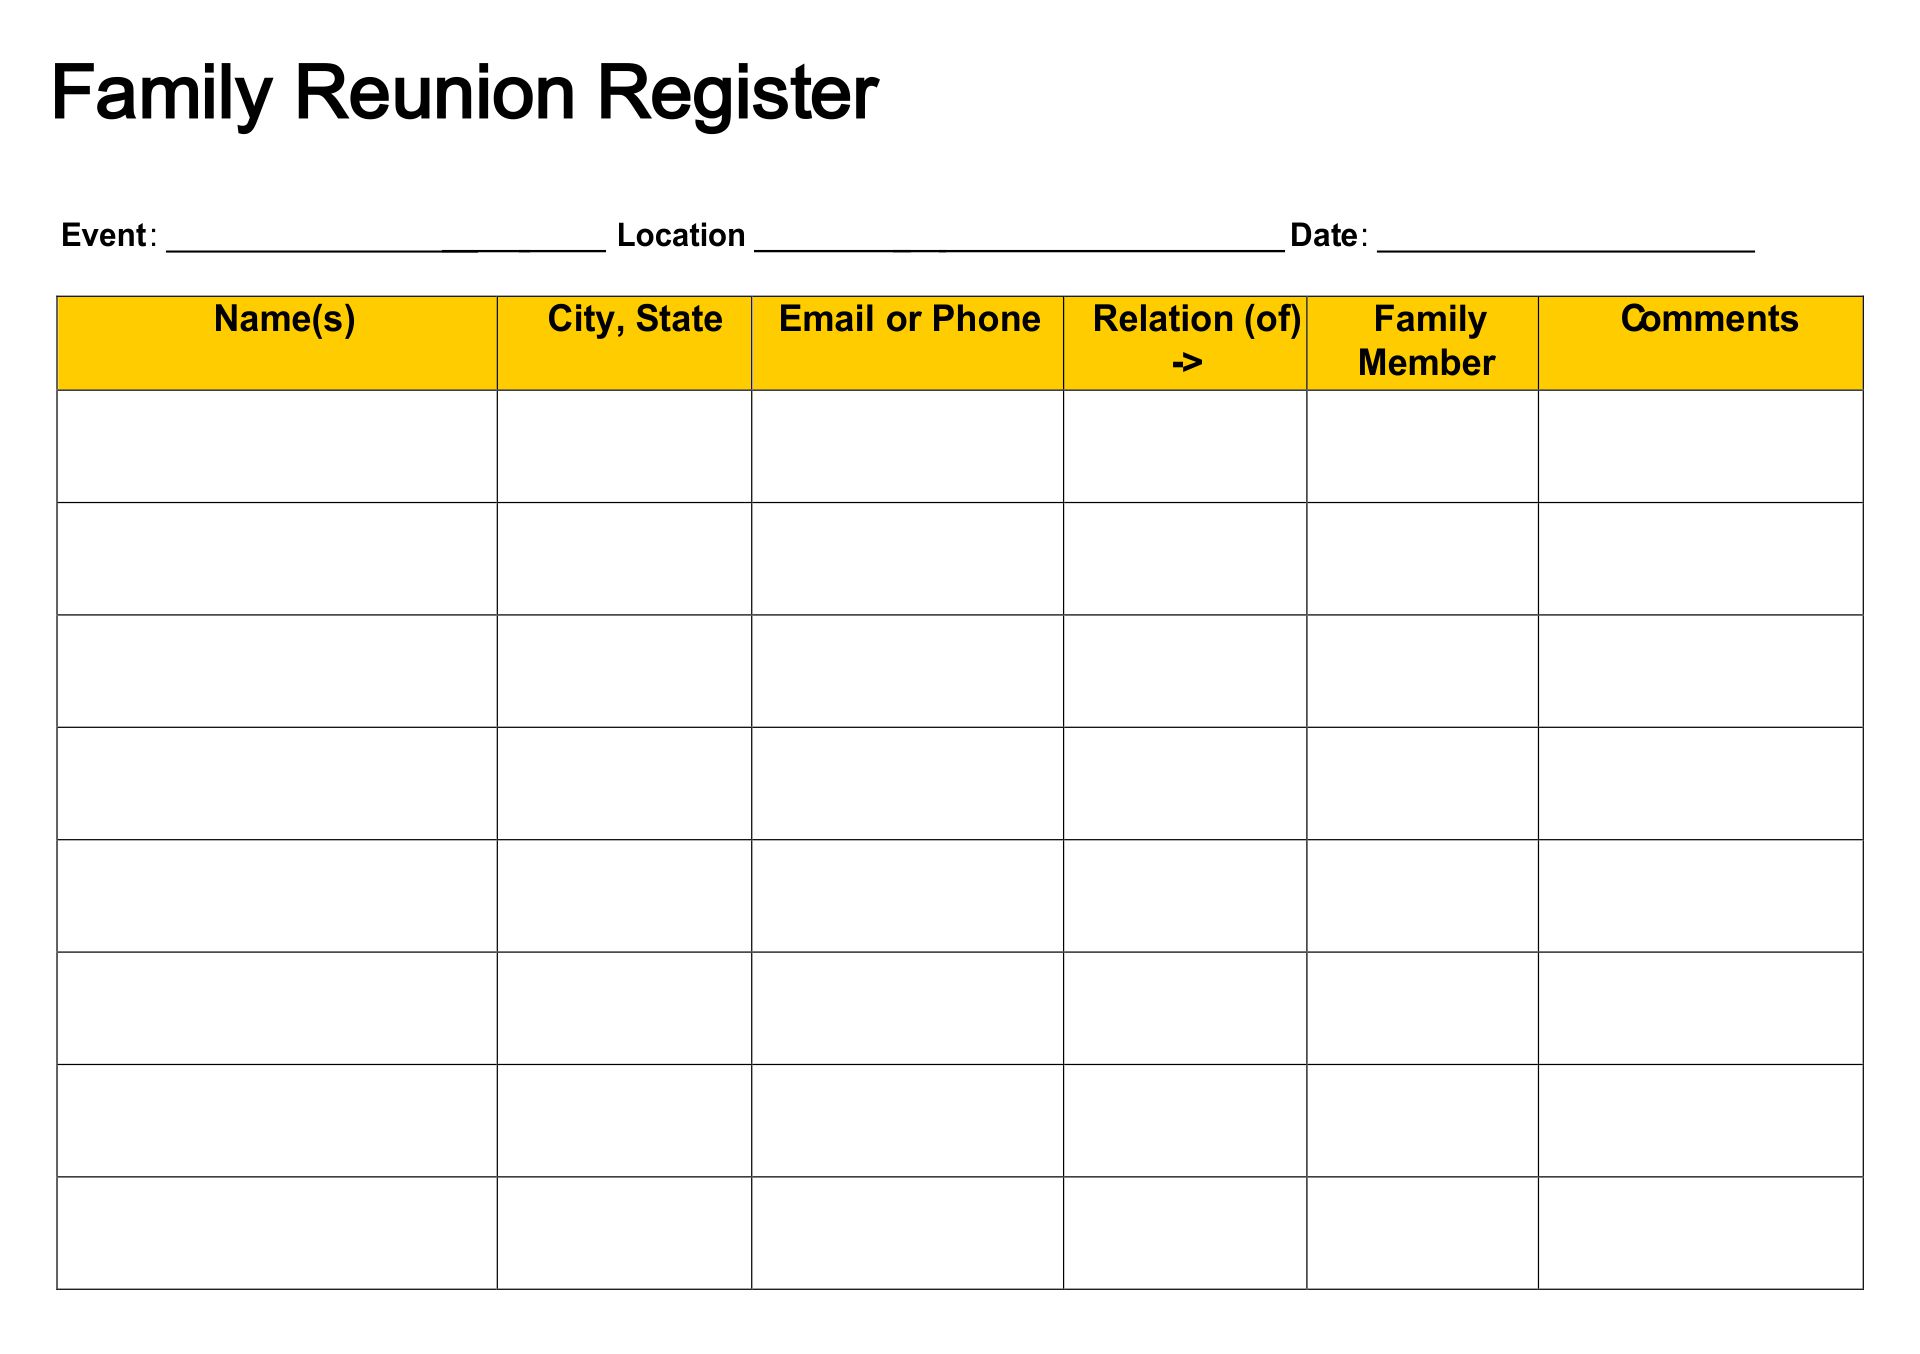 Family Reunion Registration Form Template